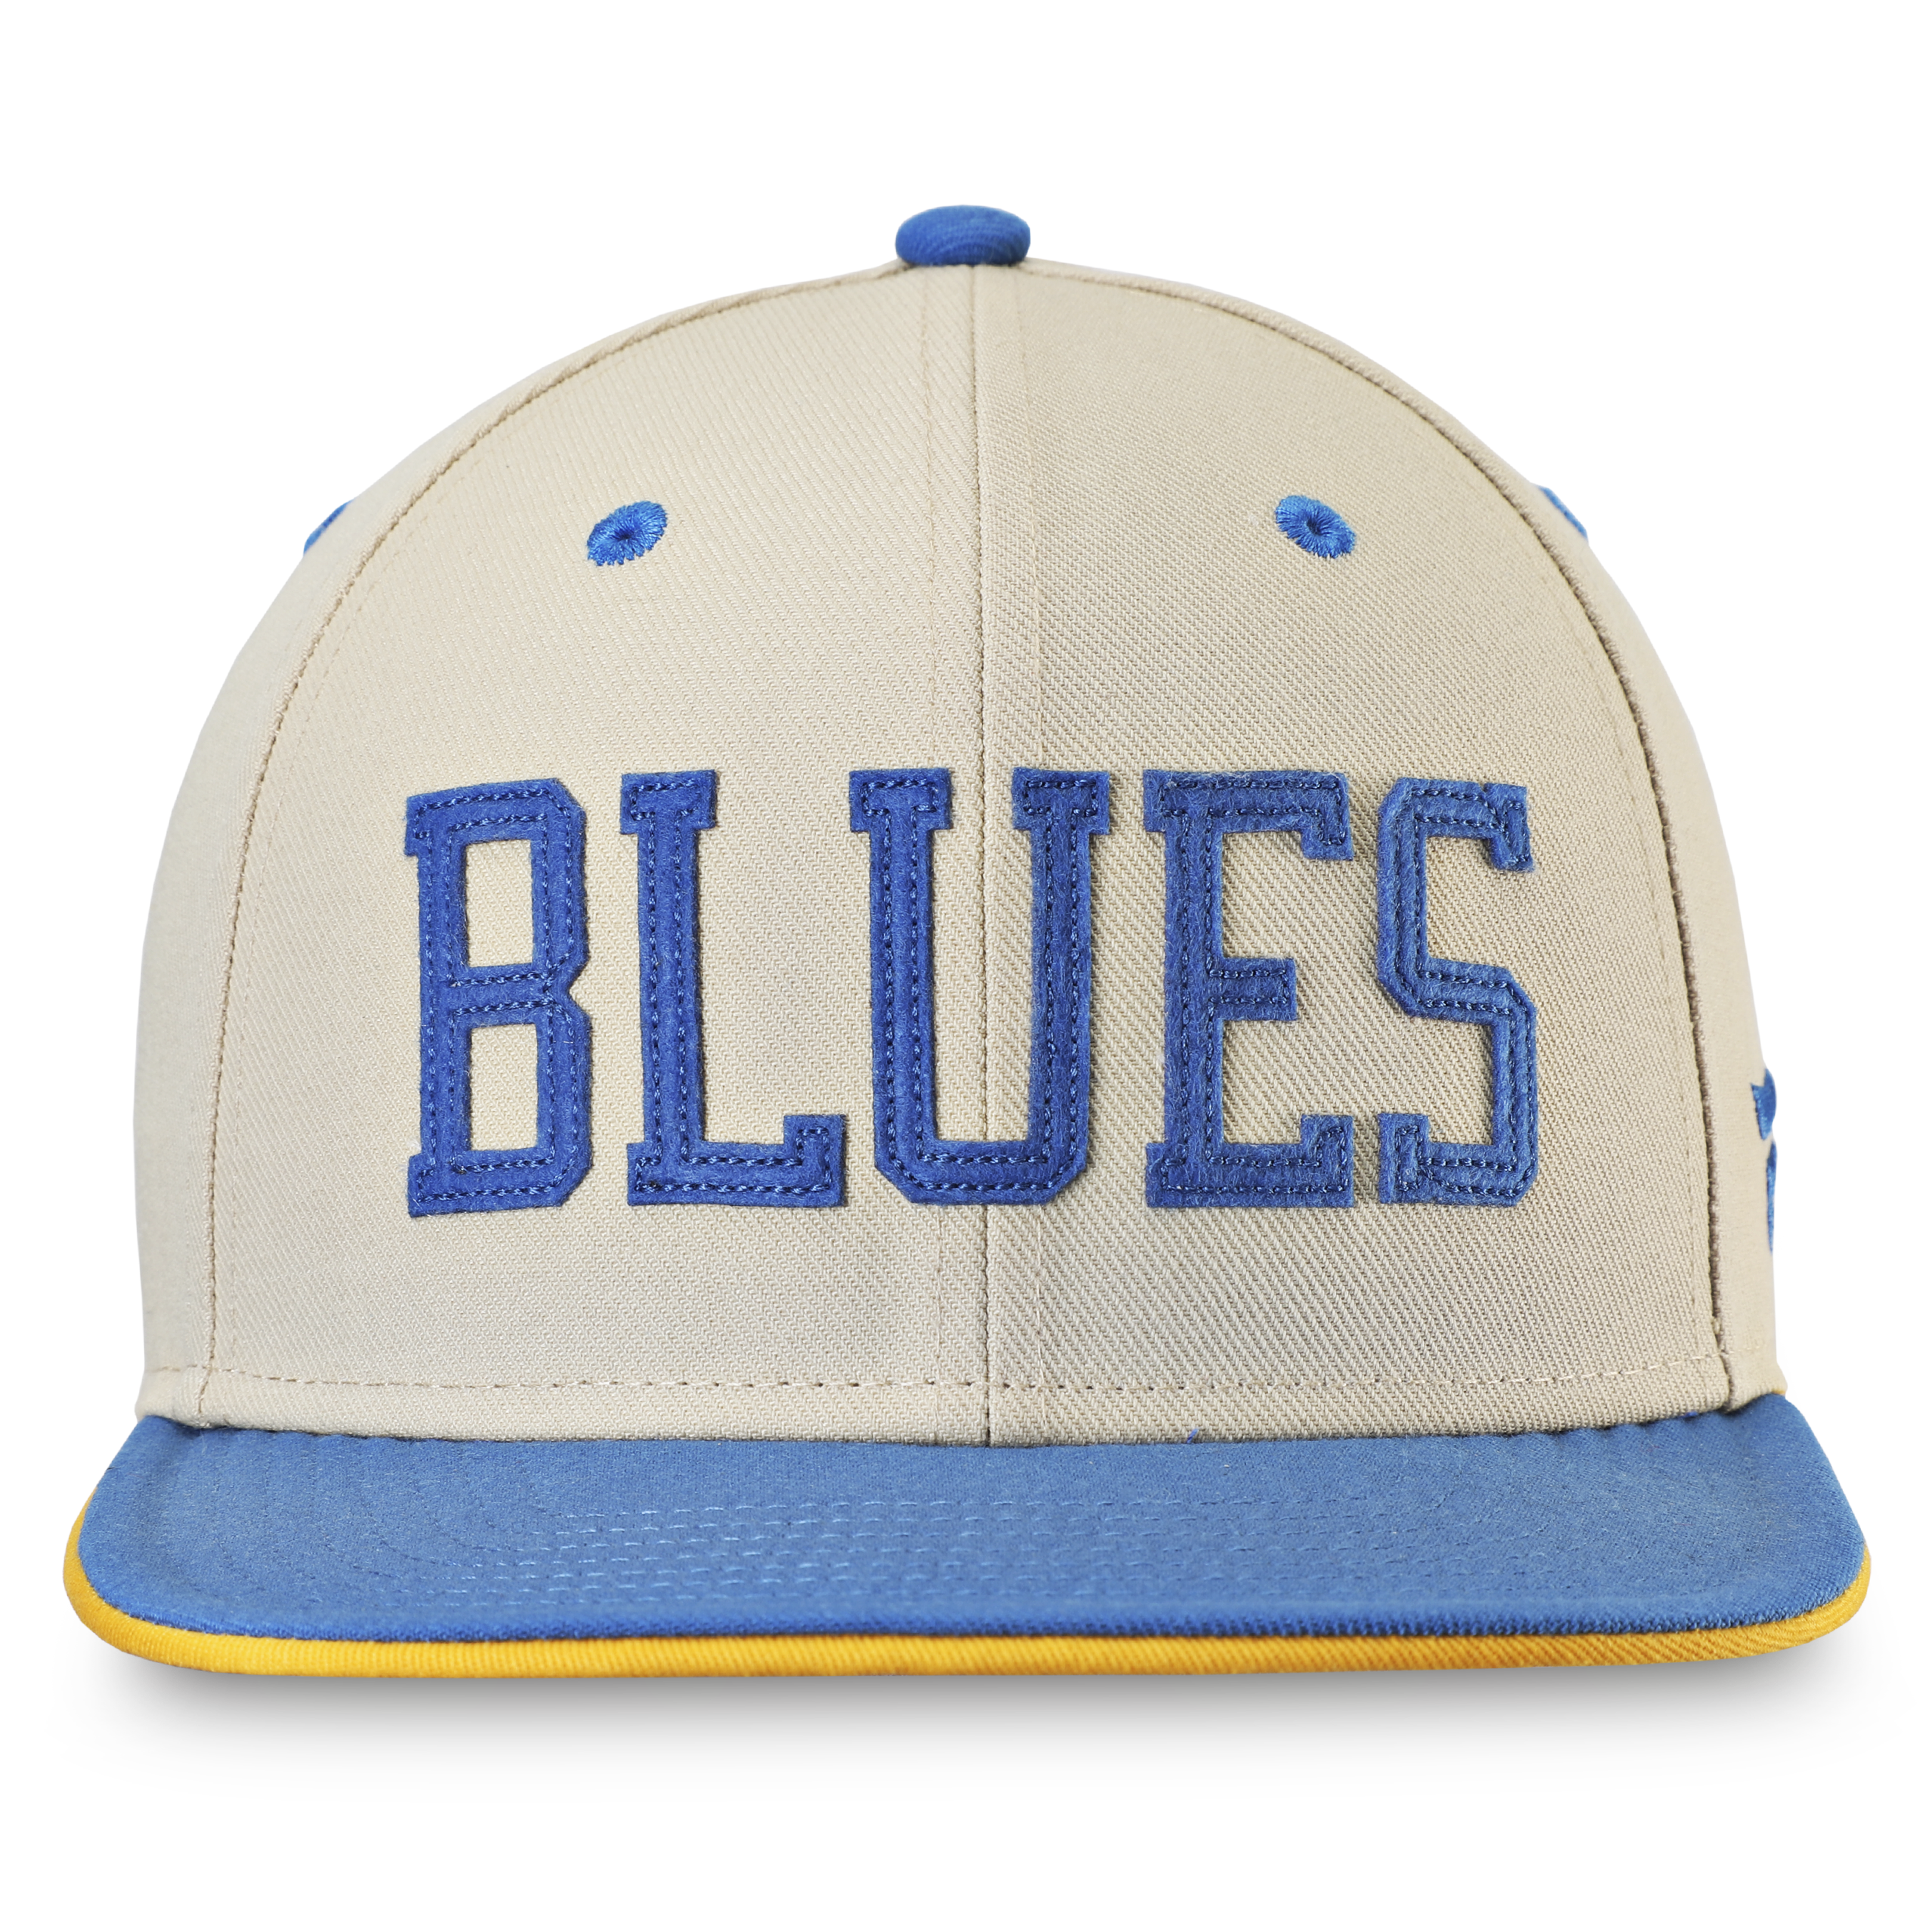 St. Louis Blues Fanatics Branded True Classic Retro Adjustable Hat - Blue